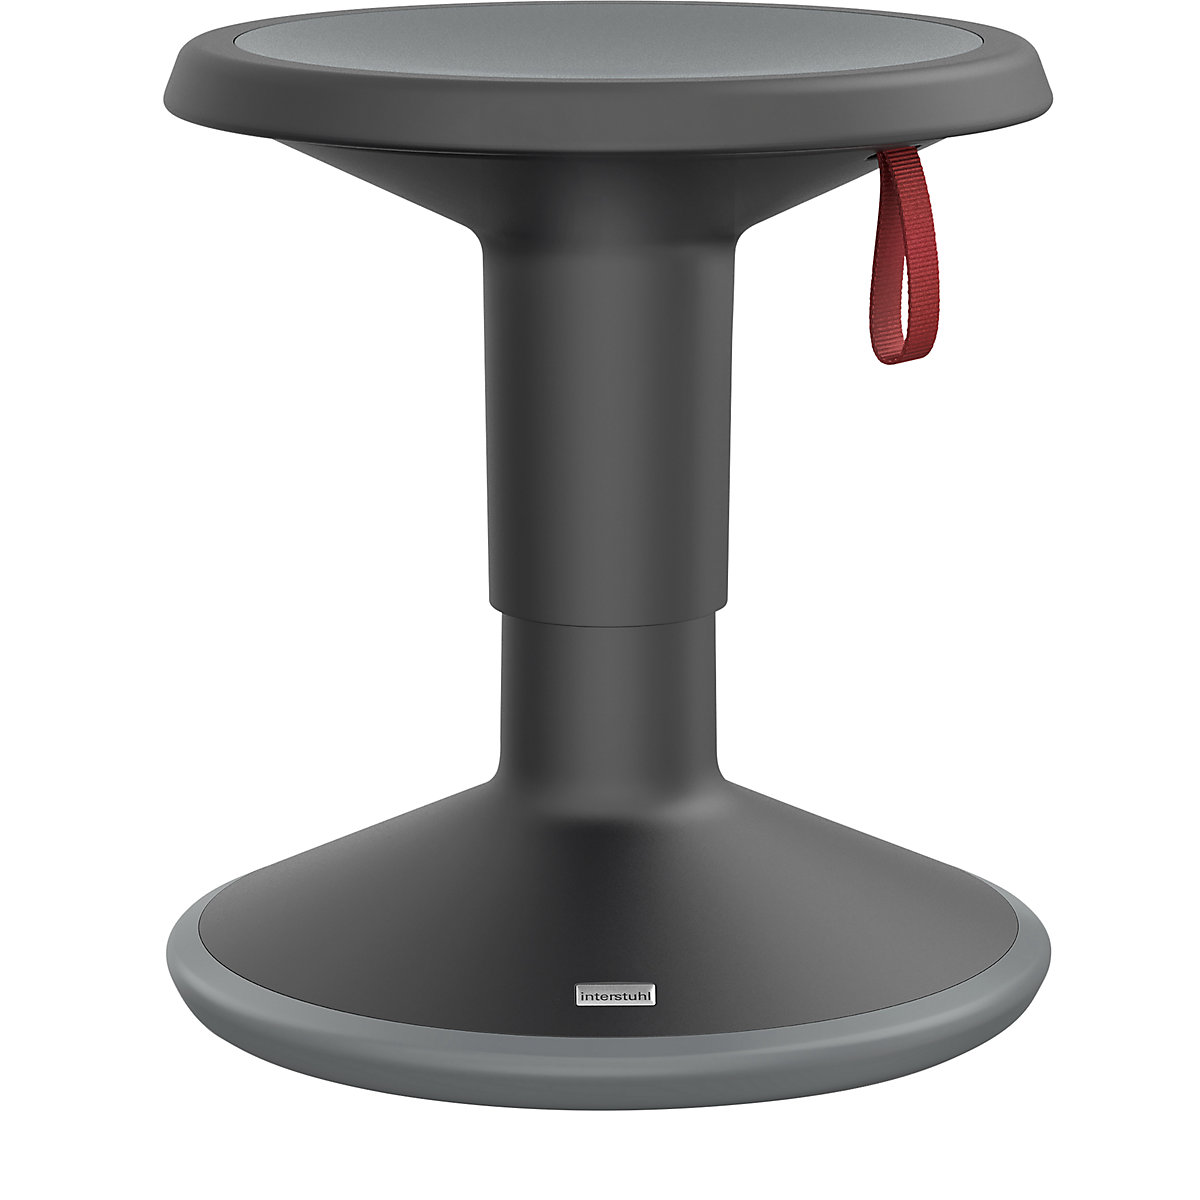 interstuhl – UP multifunctional stool, height adjustable 375 – 490 mm, black